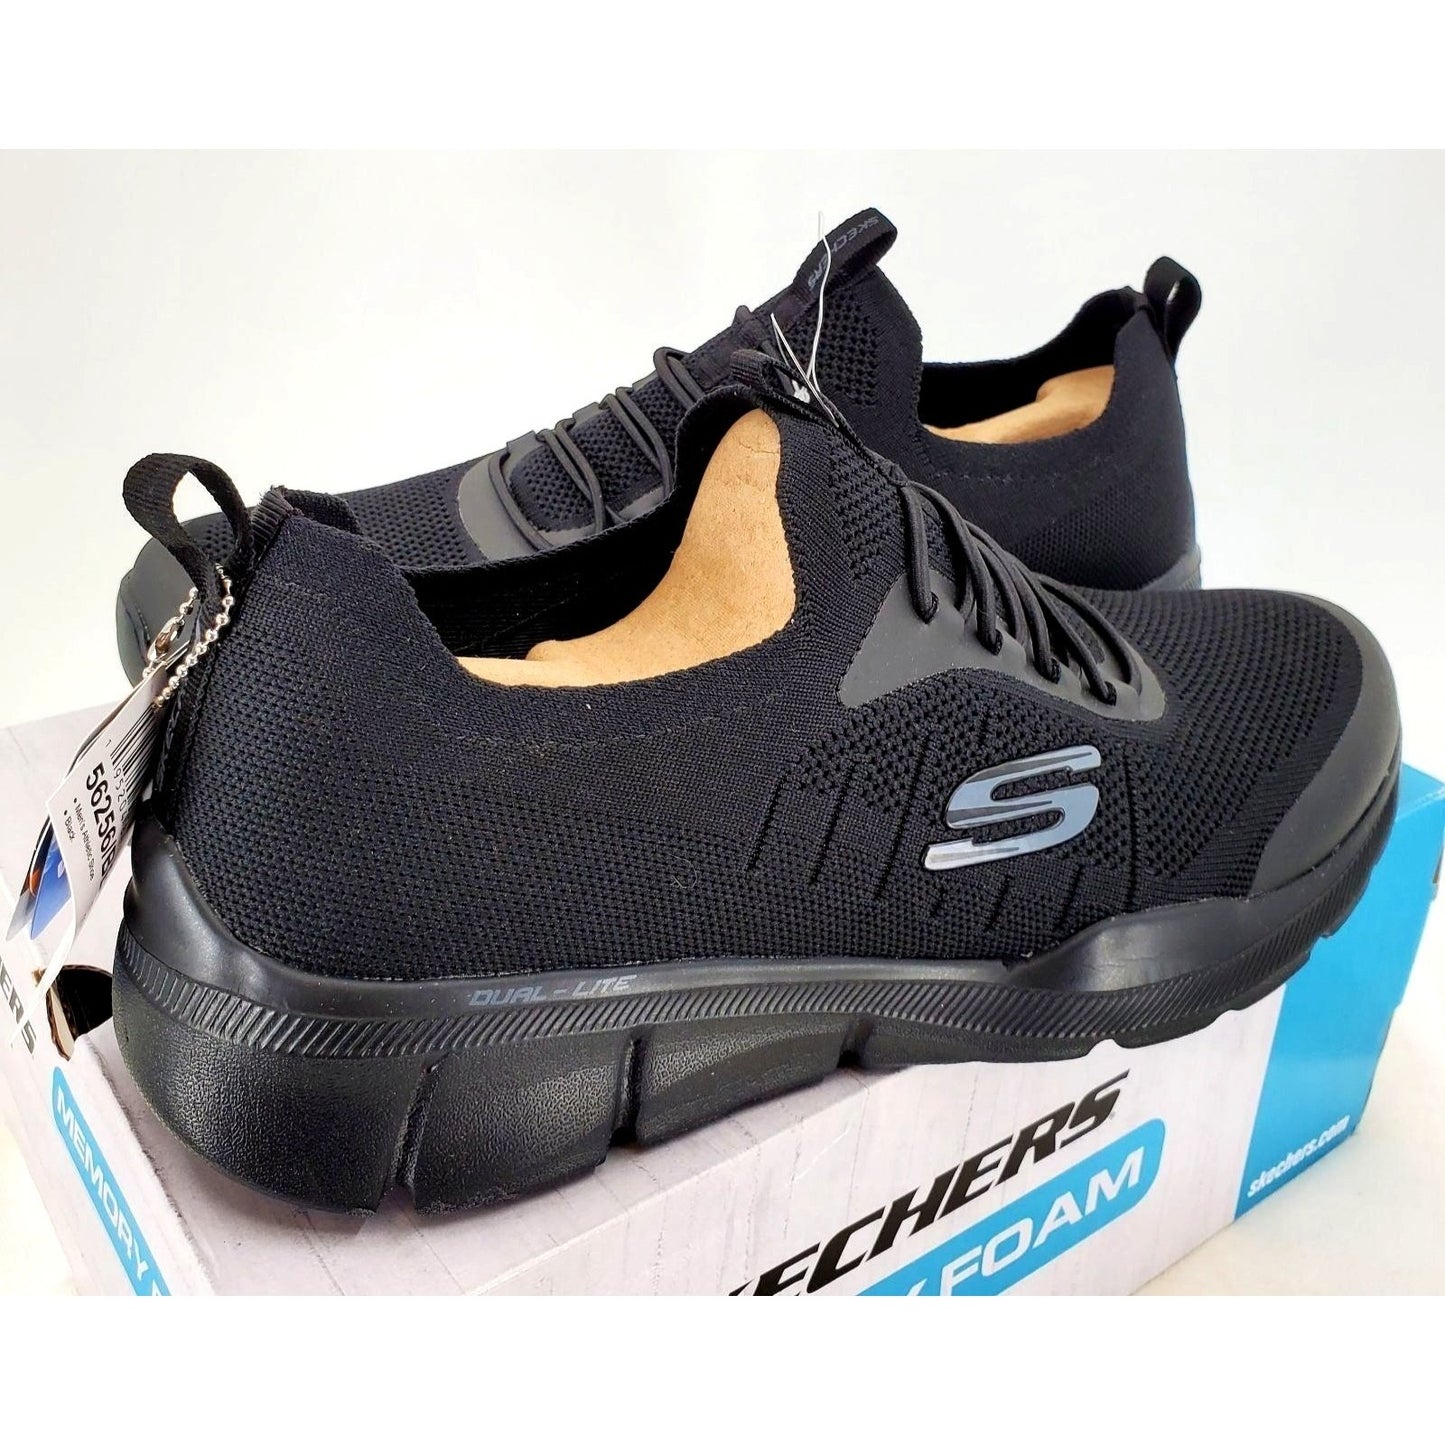 SKECHERS Sneakers Men's DUAL LITE Activewear Mesh Knit Athletic Shoes Black